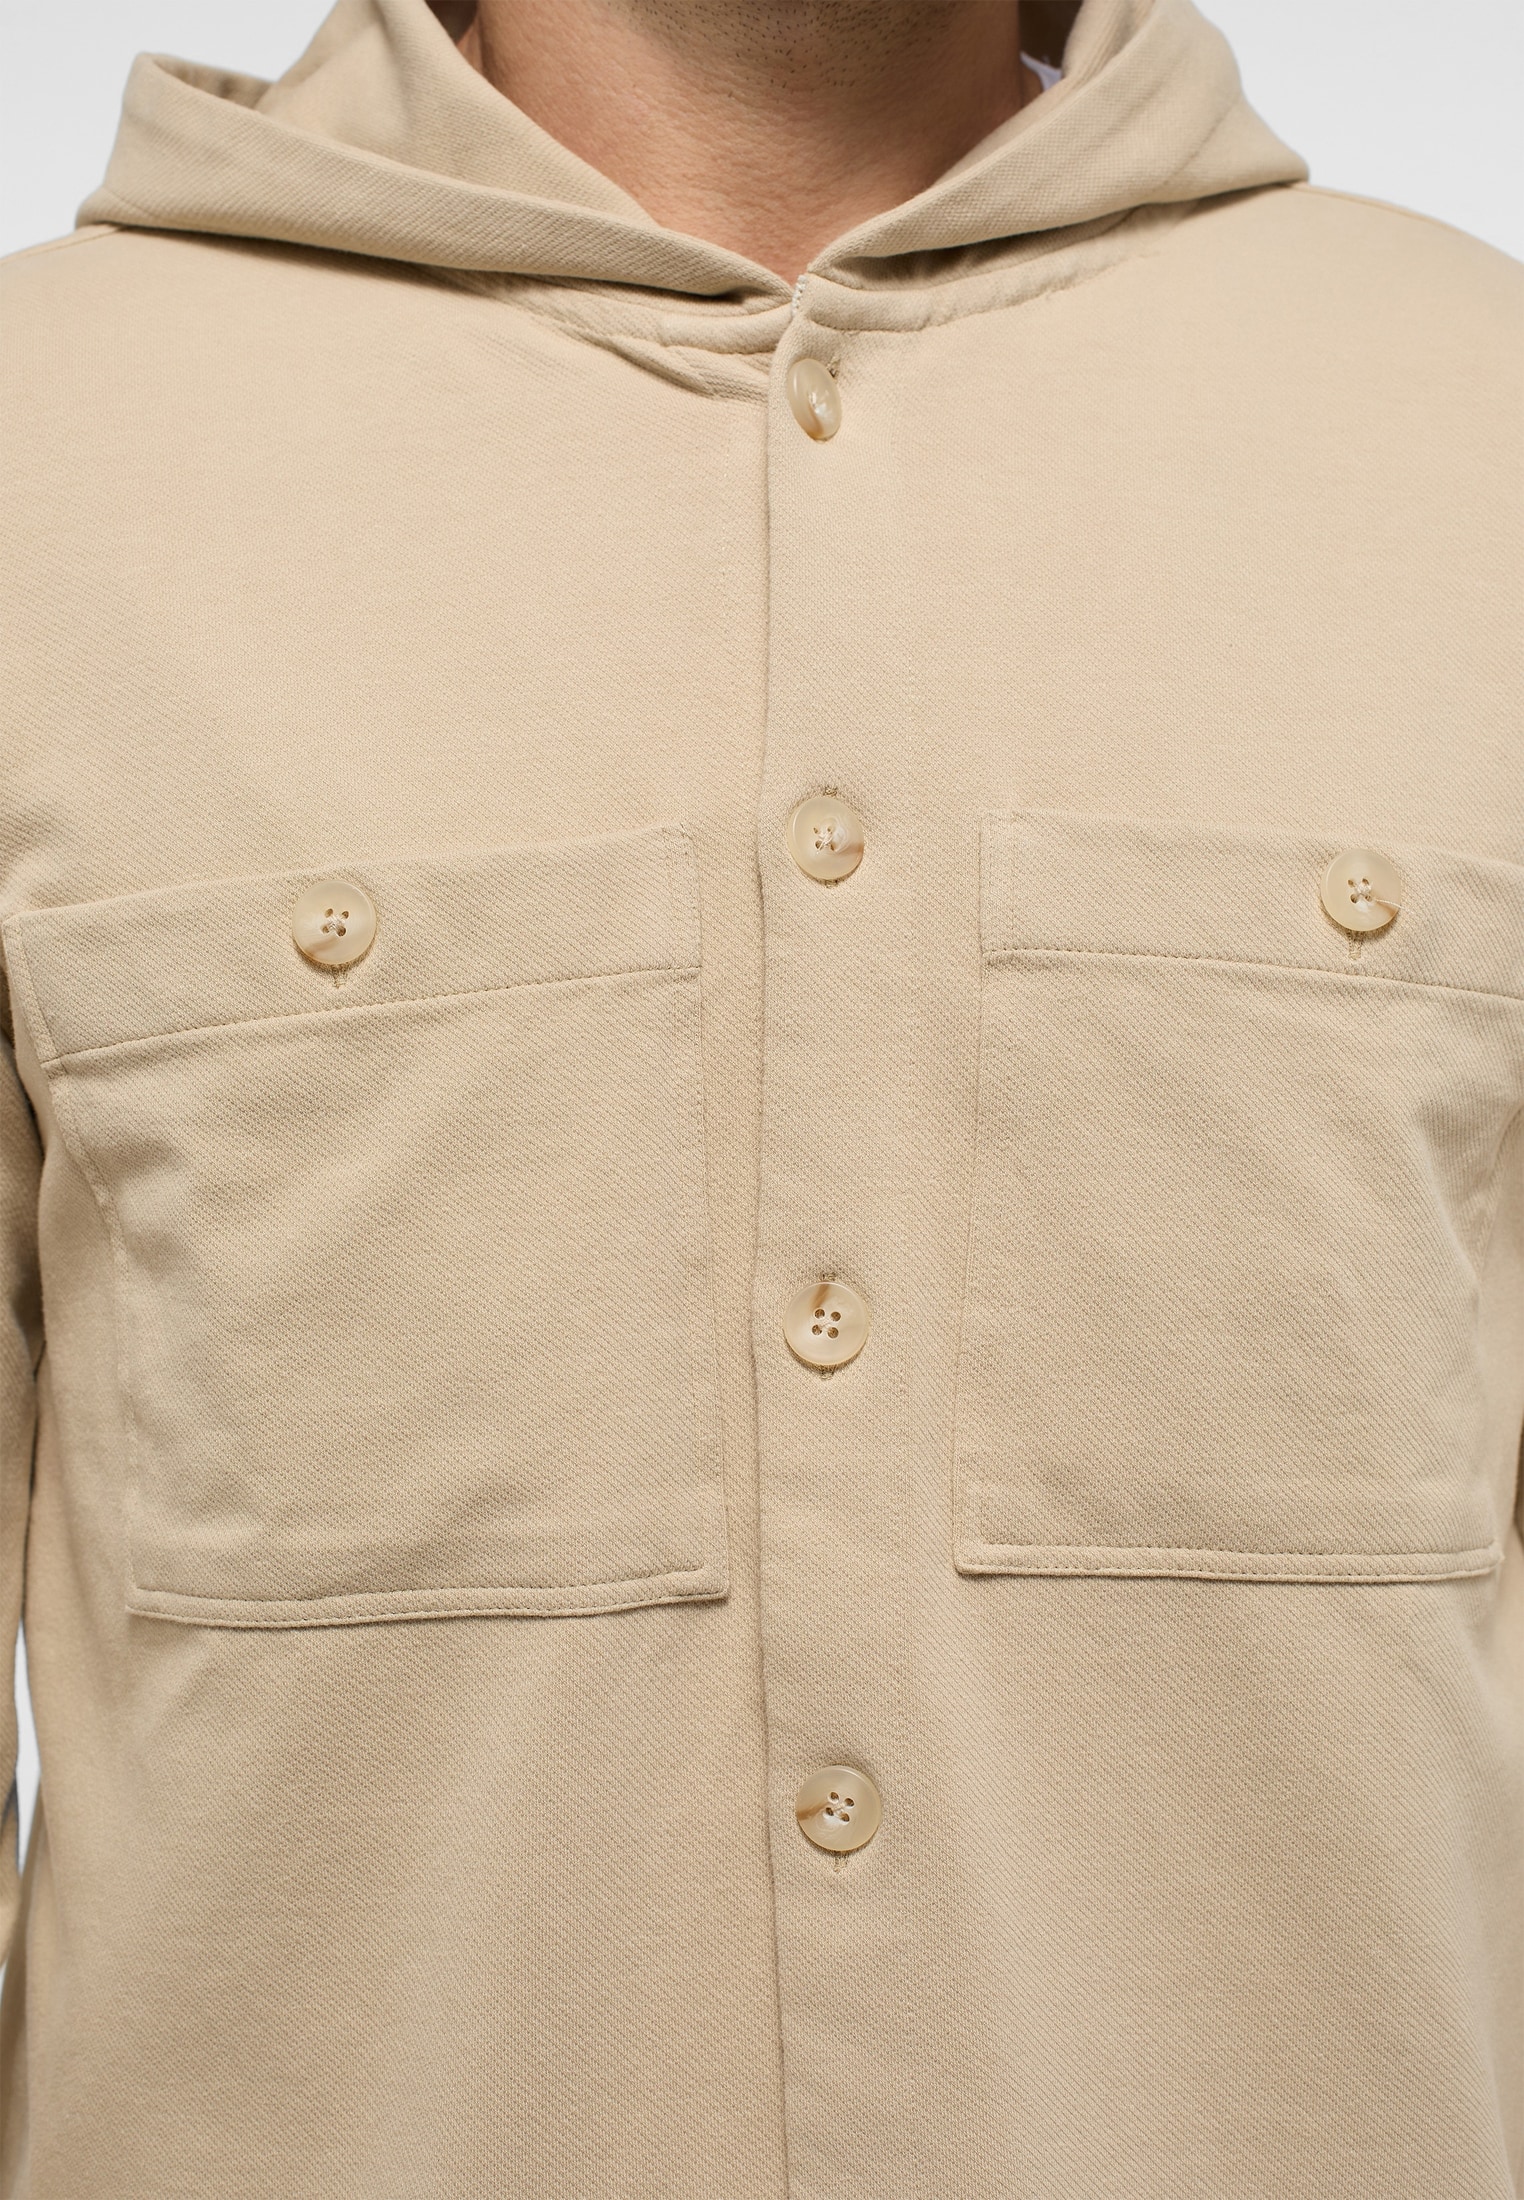 MODERN FIT Overshirt in | | 1JA00028-02-01-XL-1/1 XL unifarben beige | beige | Langarm